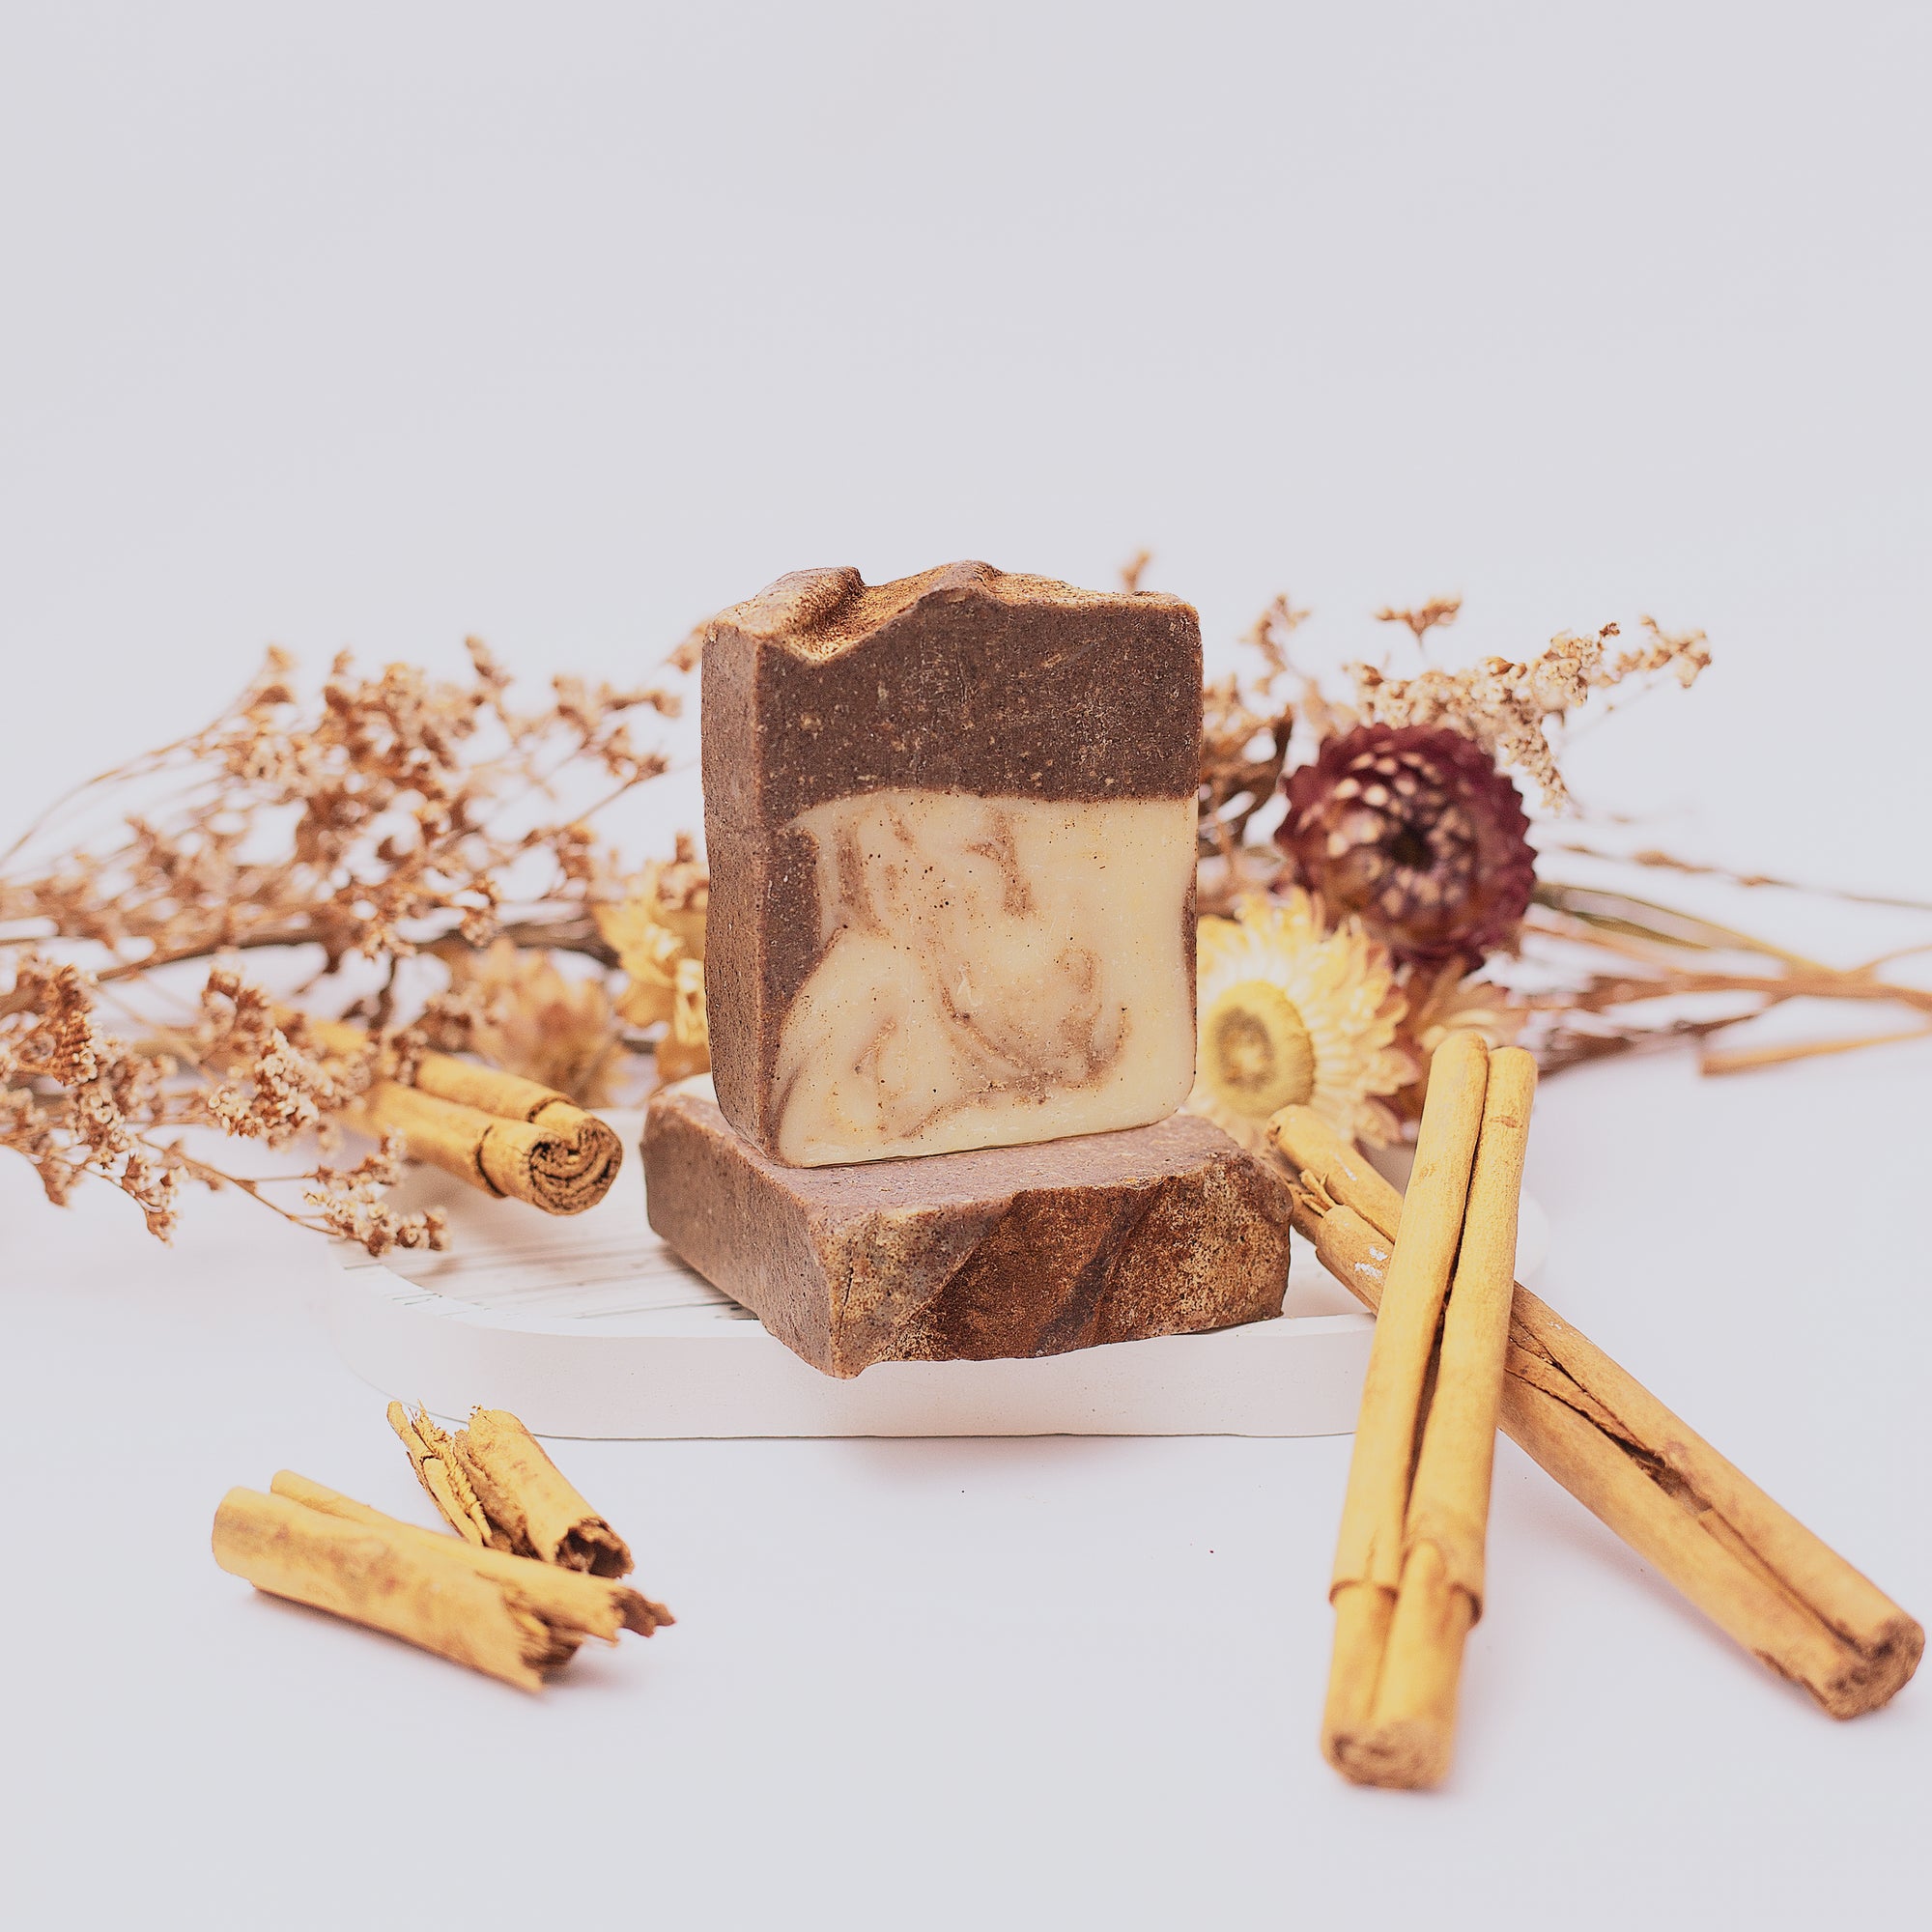 Cinnamon Soap - Lifestyle with cinnamon sticks